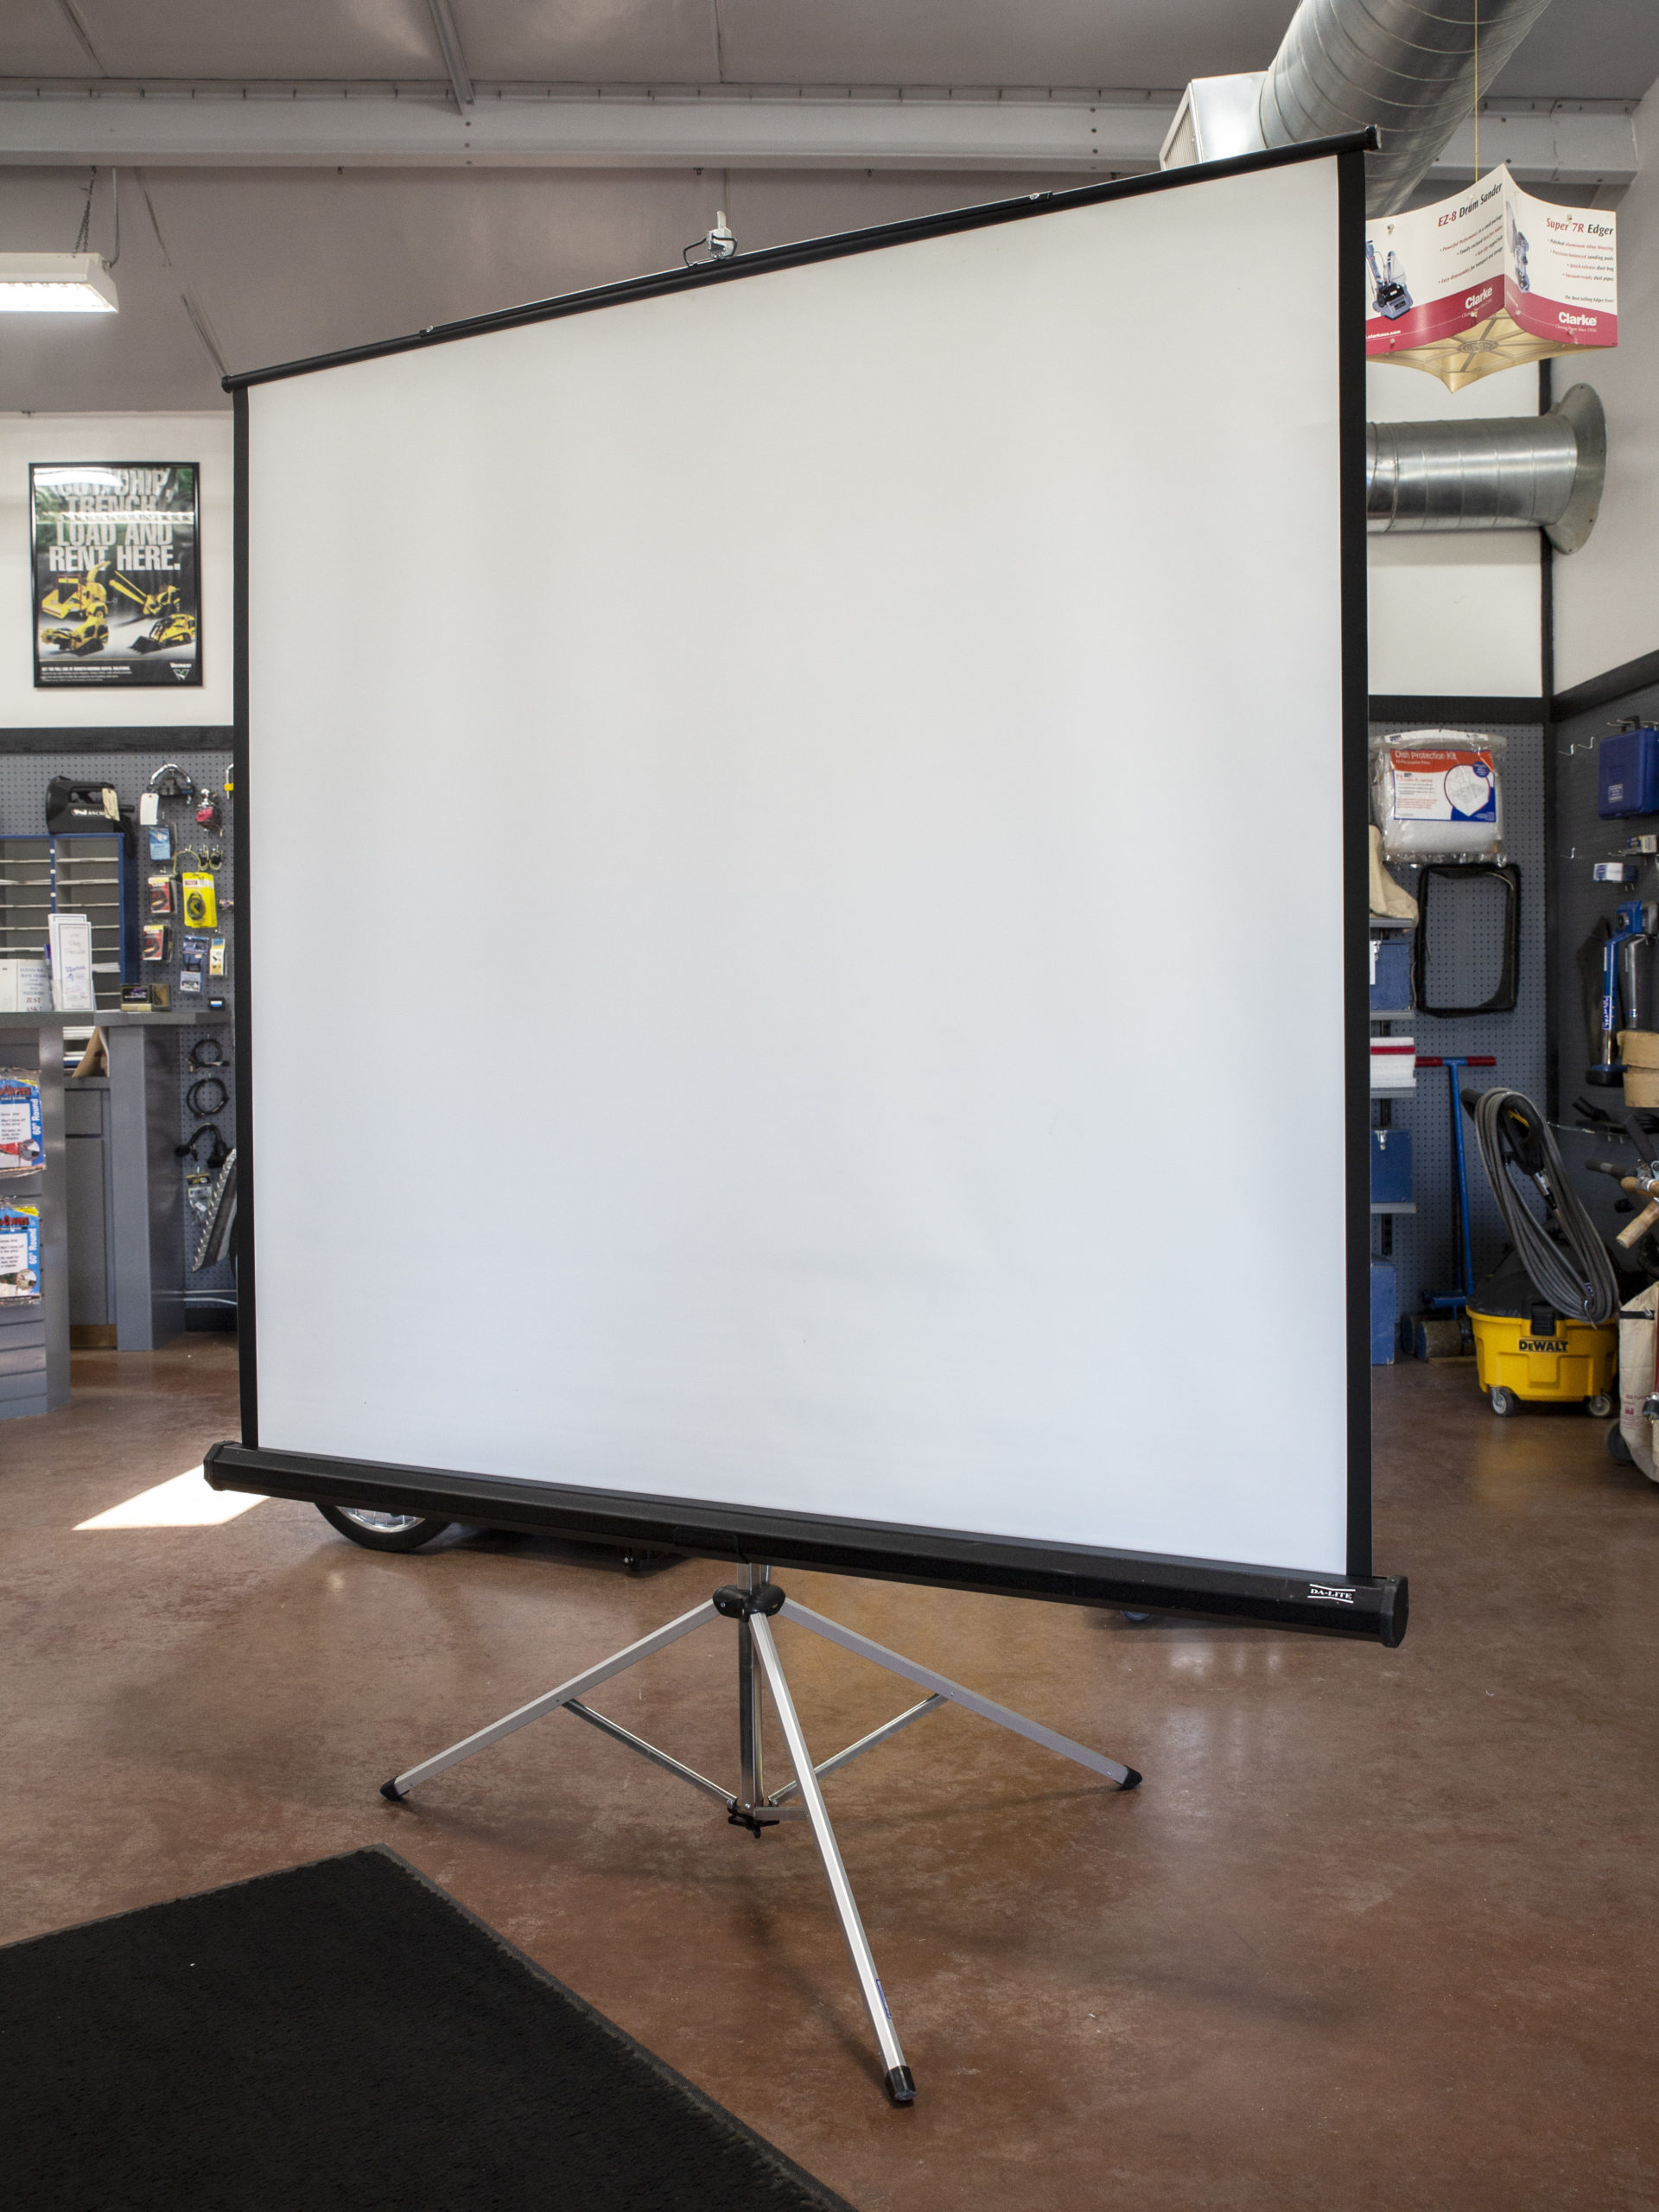 tripod projector screen stand